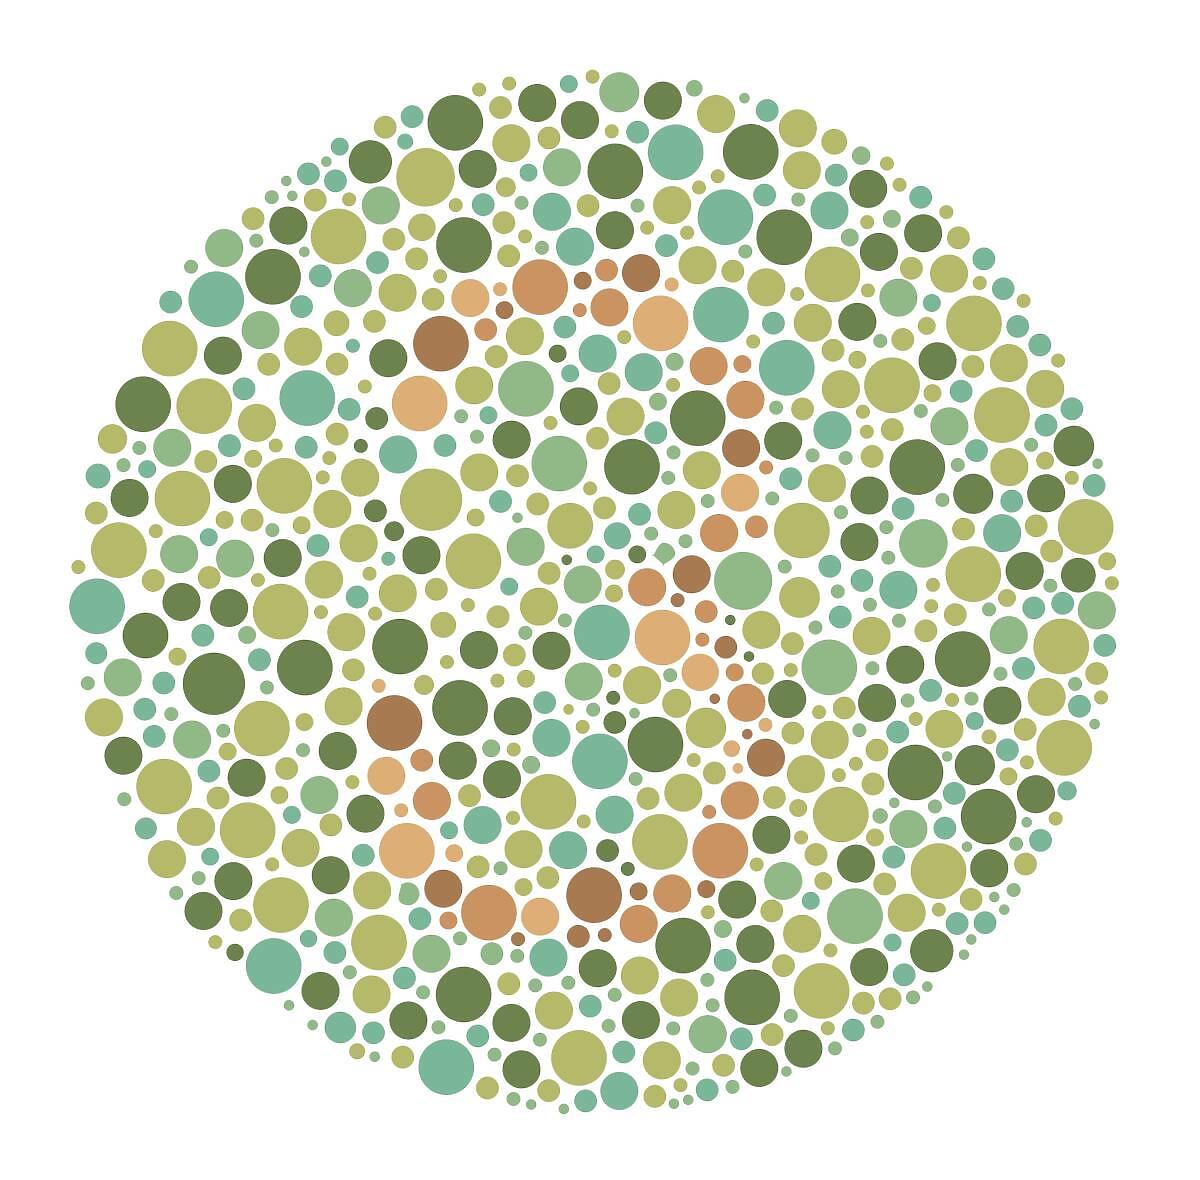 test na daltonizm